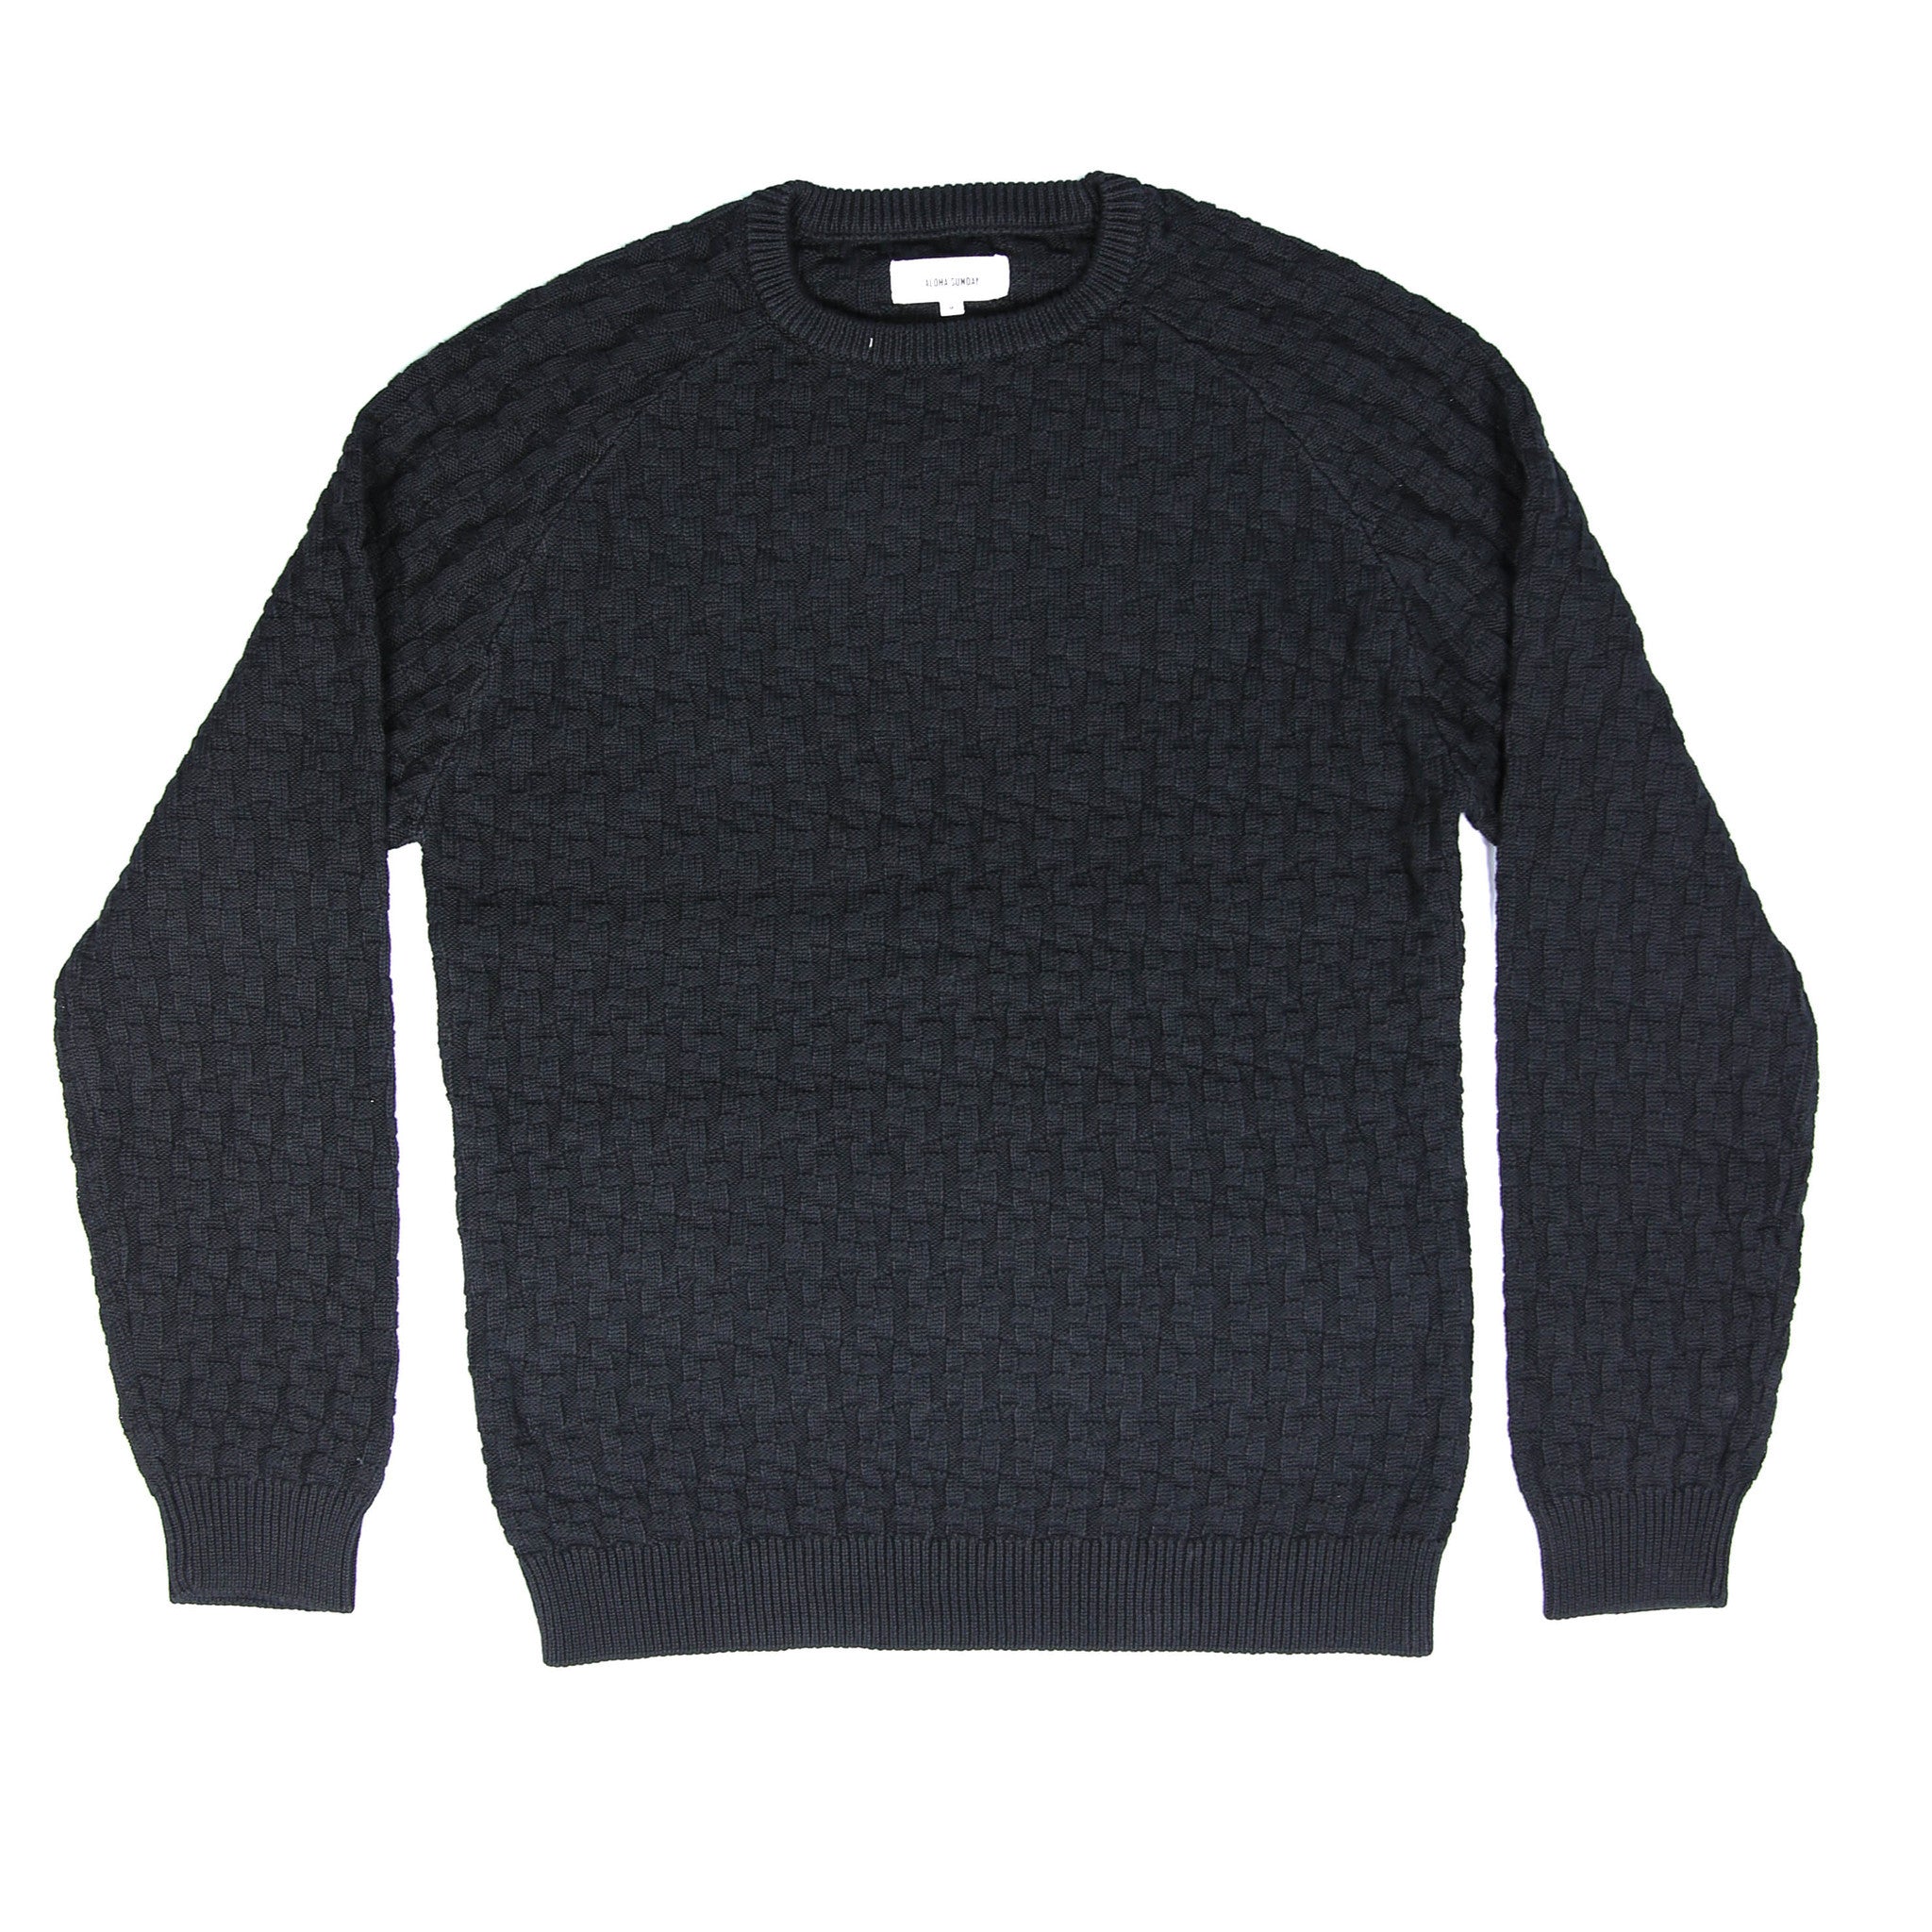 Relief Sweater - Black